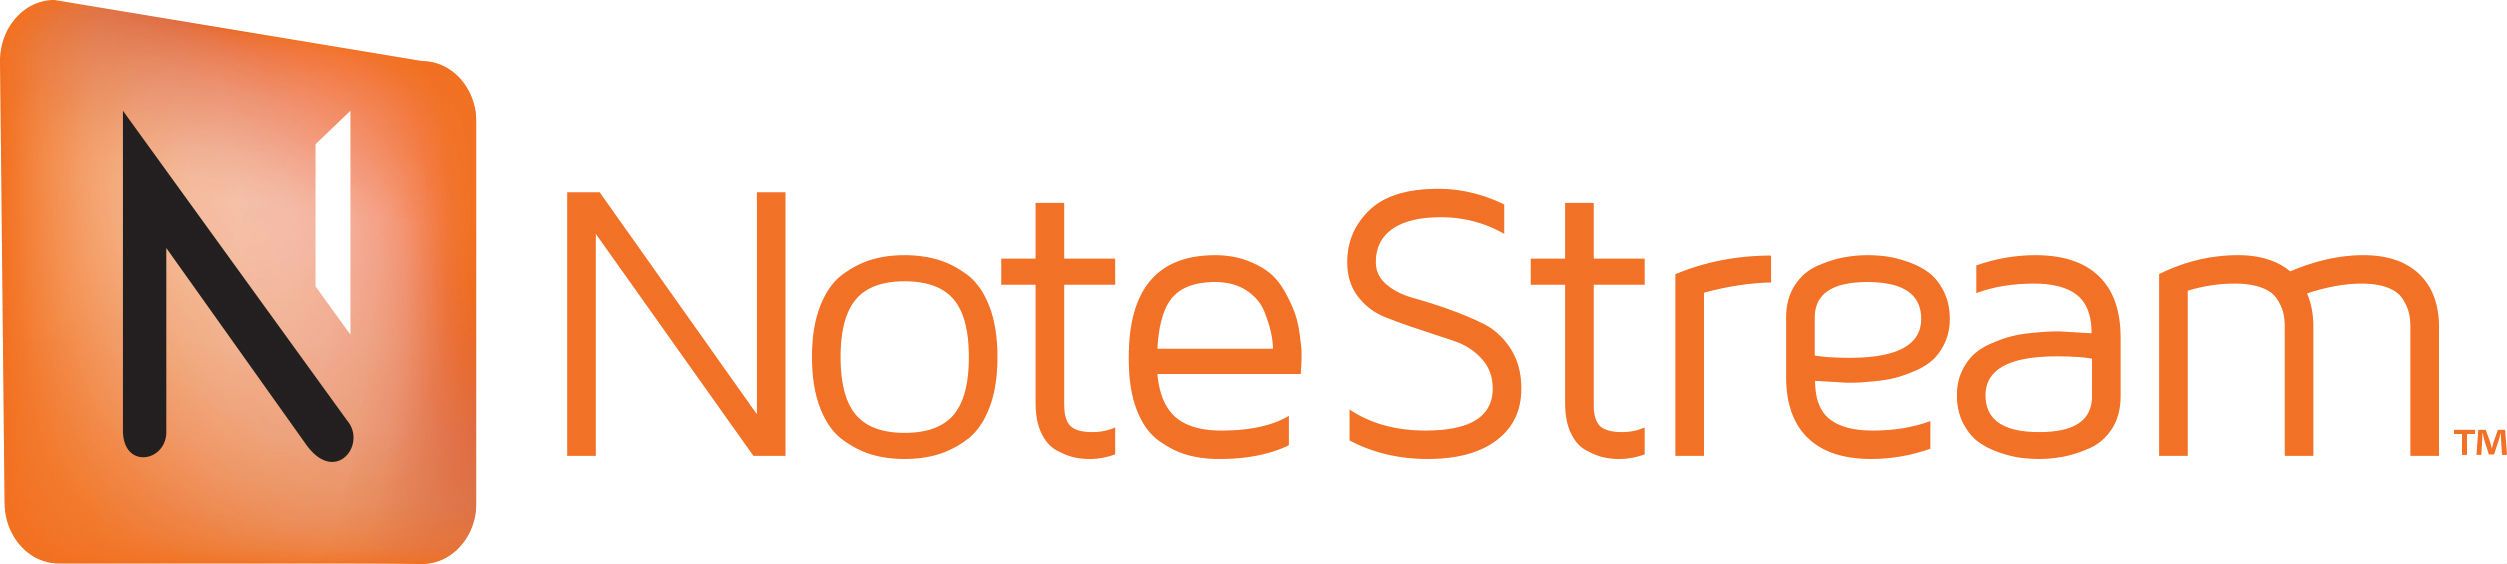 notestream Logo